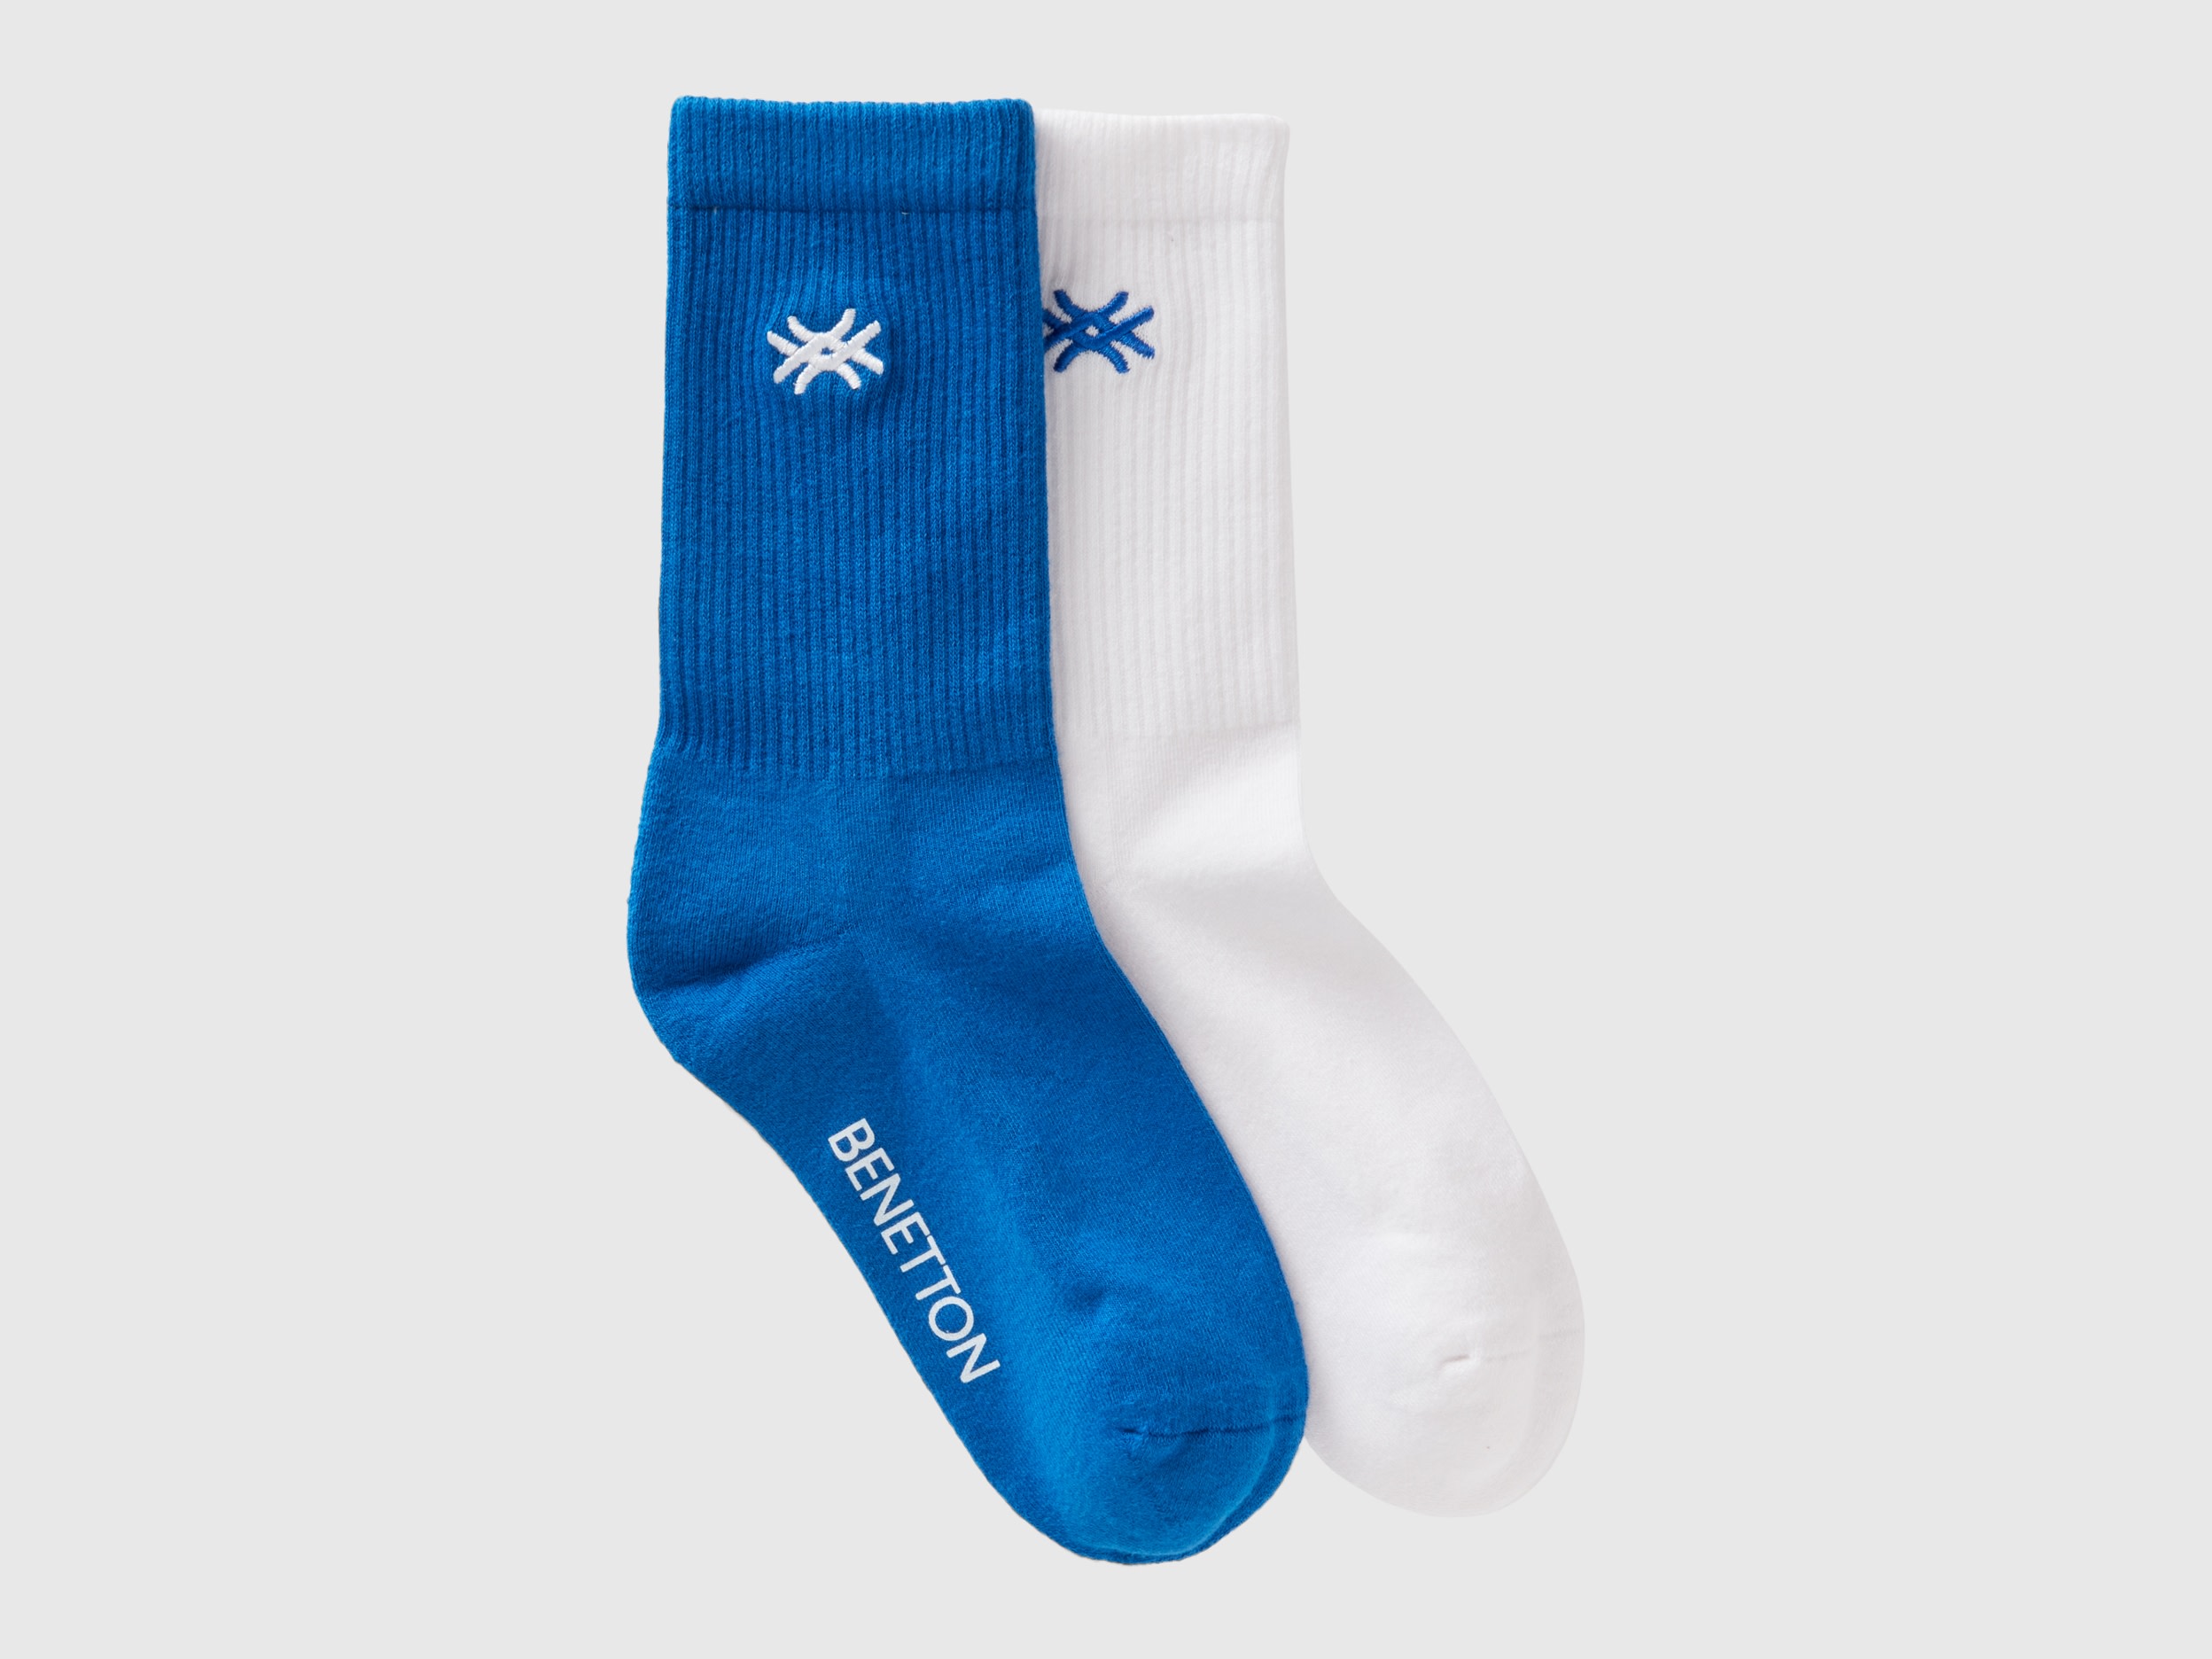 Benetton, Set Of Athletic Socks, size 5-8, Multi-color, Kids